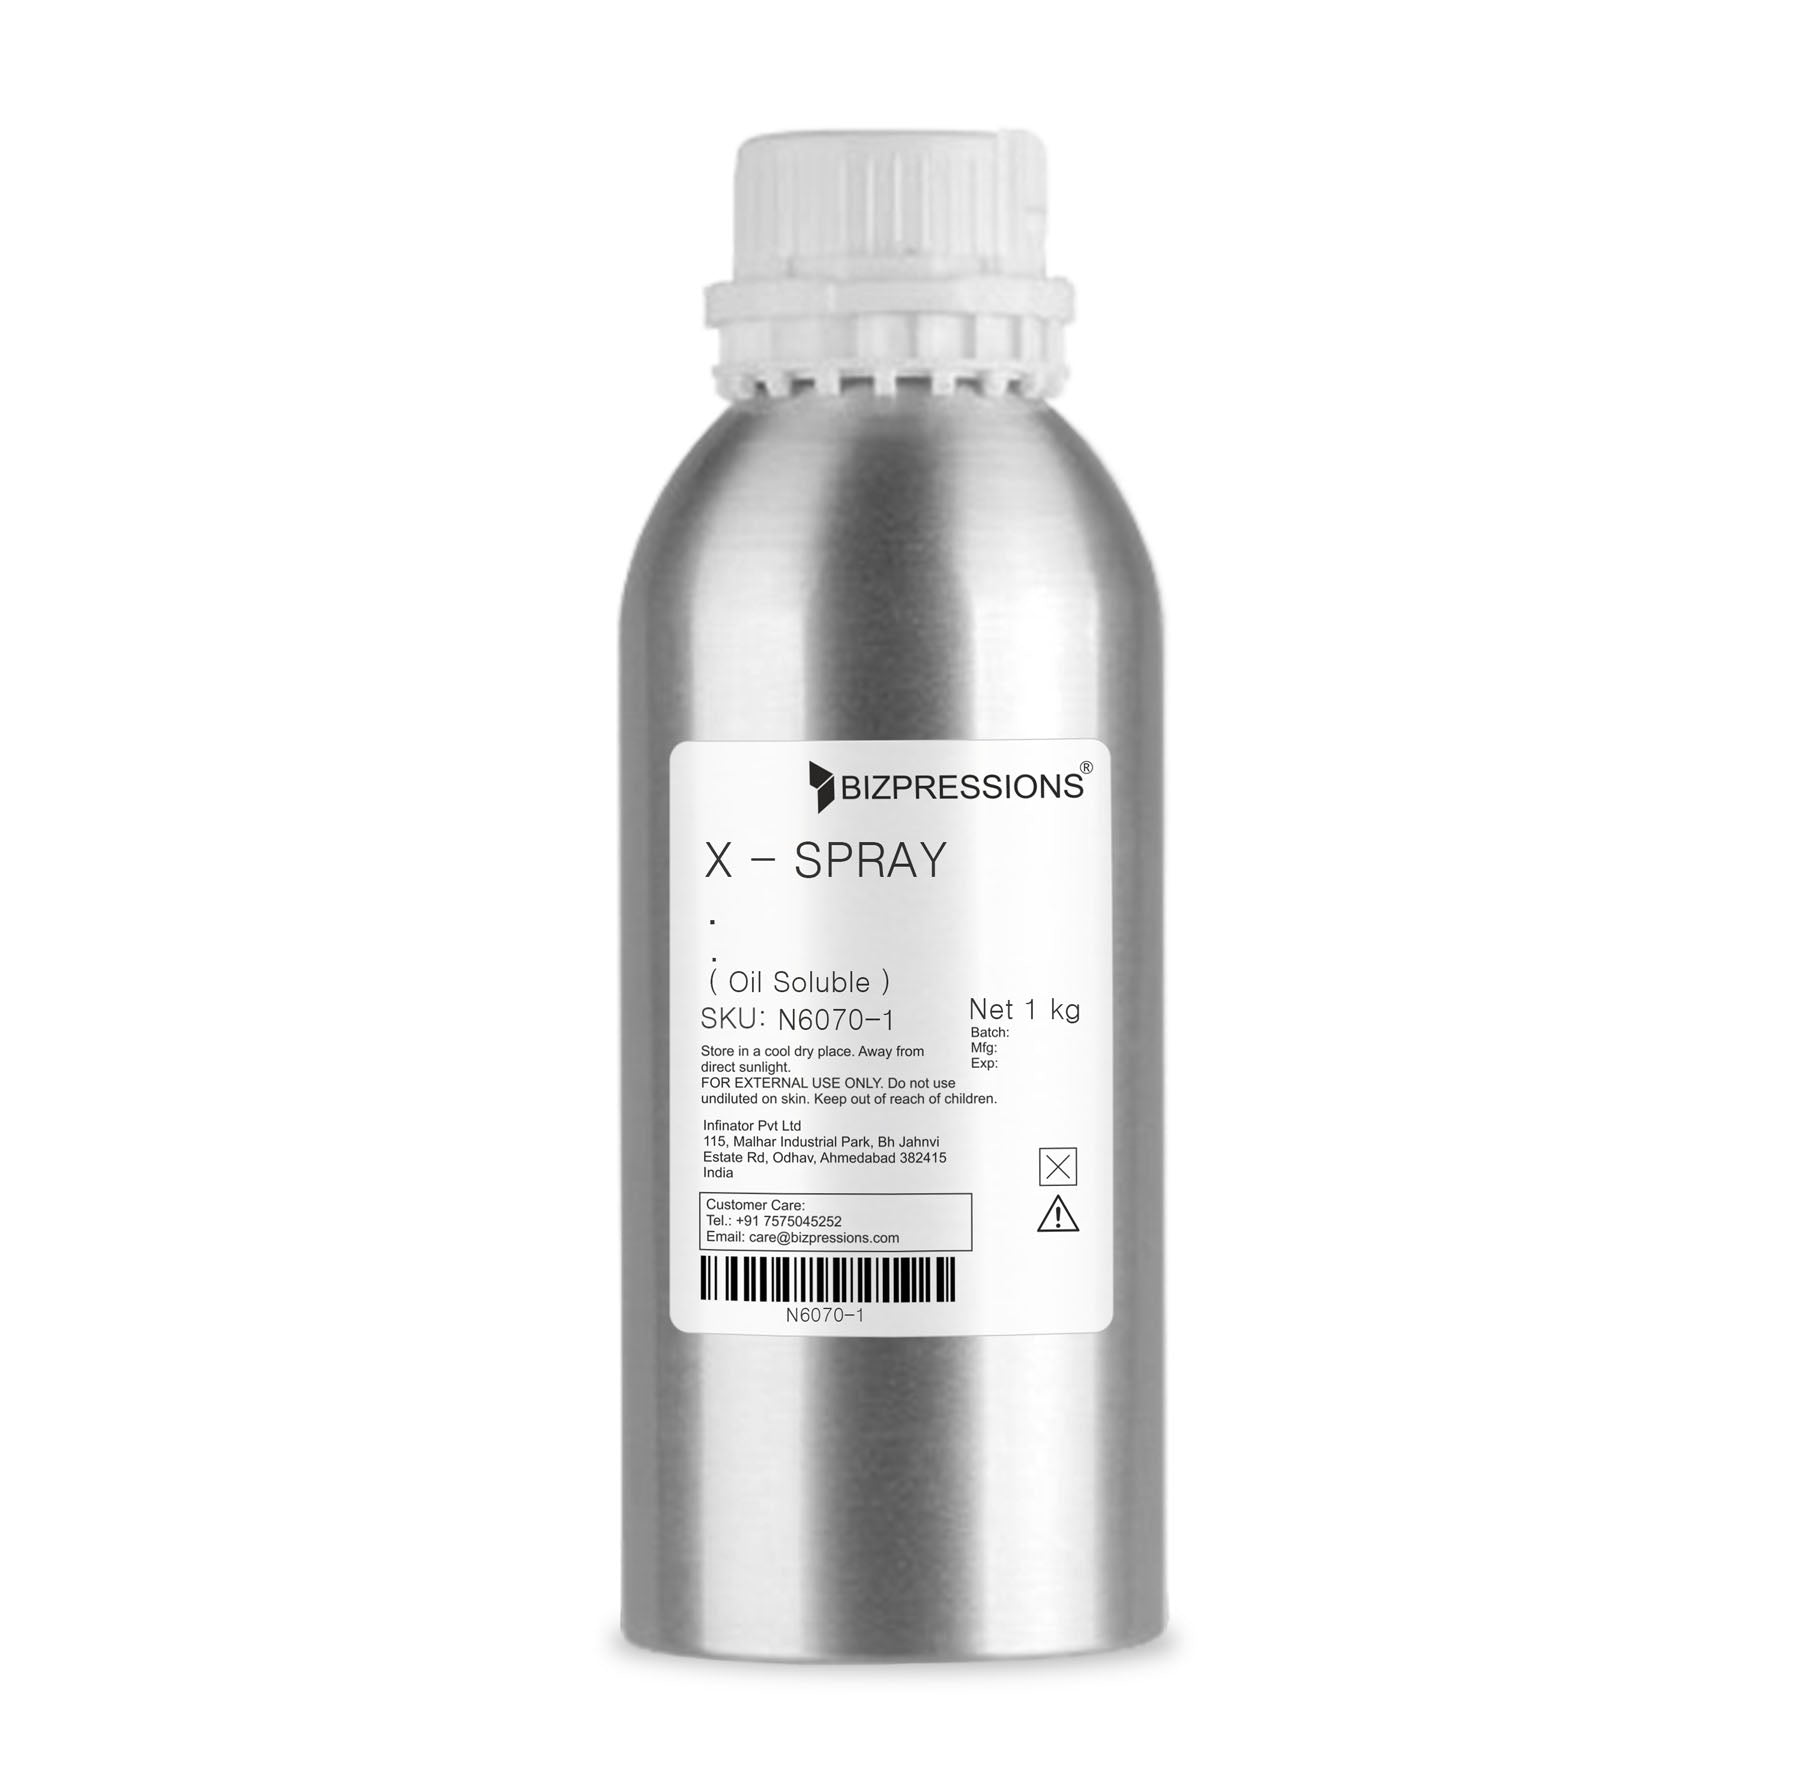 X - SPRAY - Fragrance ( Oil Soluble ) - 1 kg